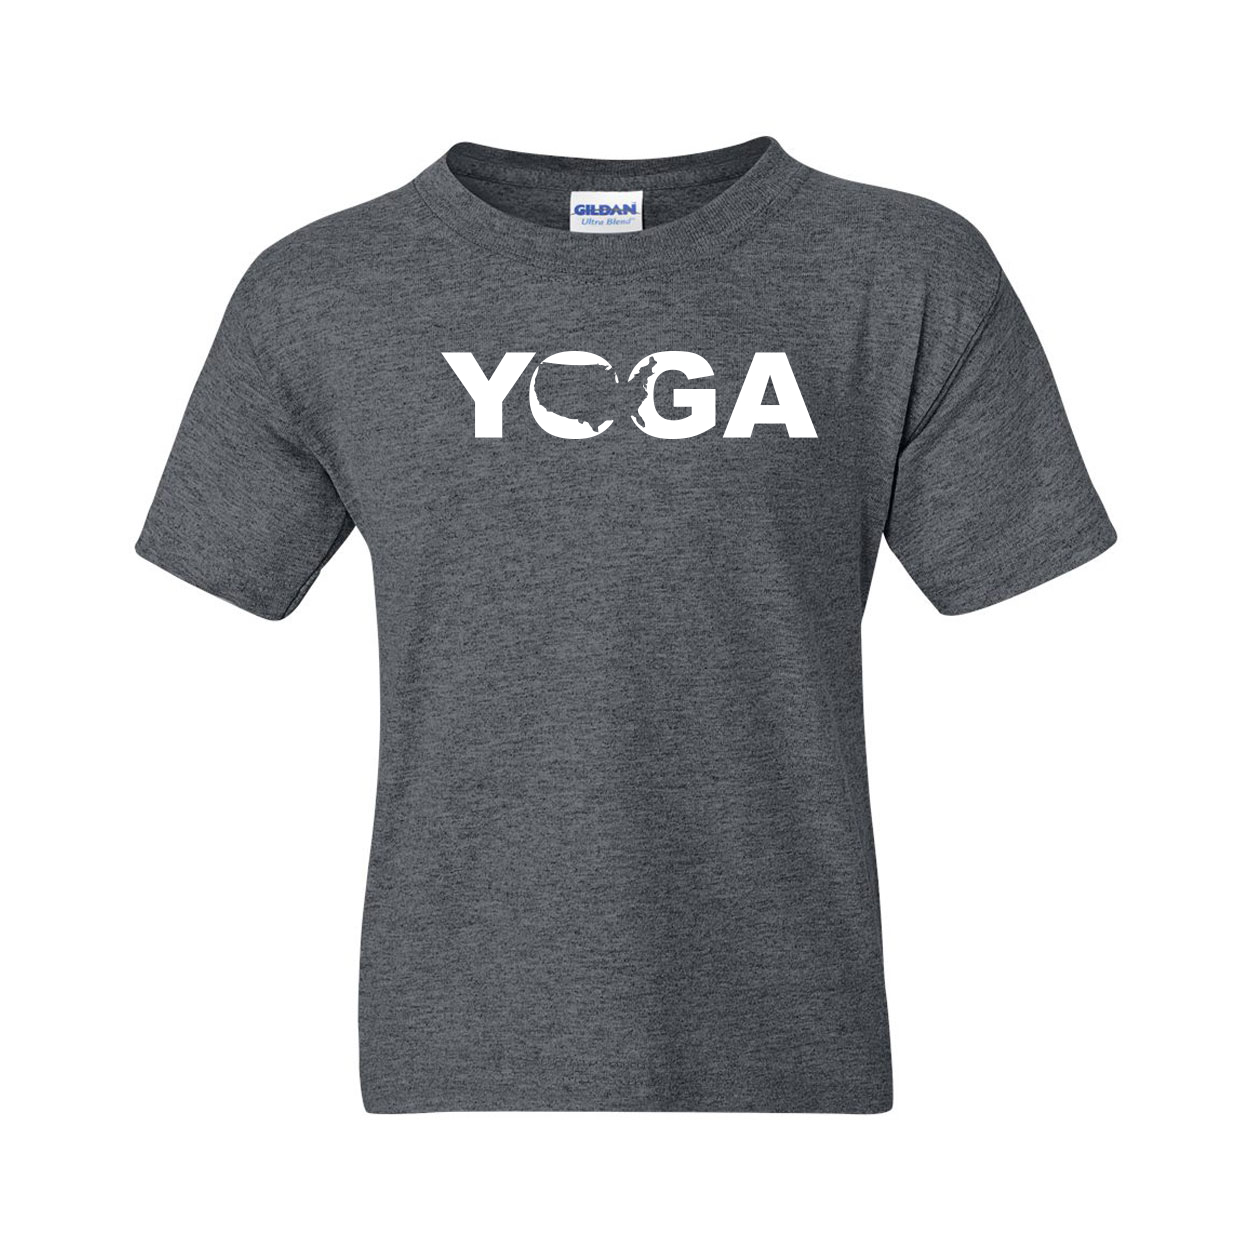 Yoga United States Classic Youth T-Shirt Dark Heather Gray (White Logo)